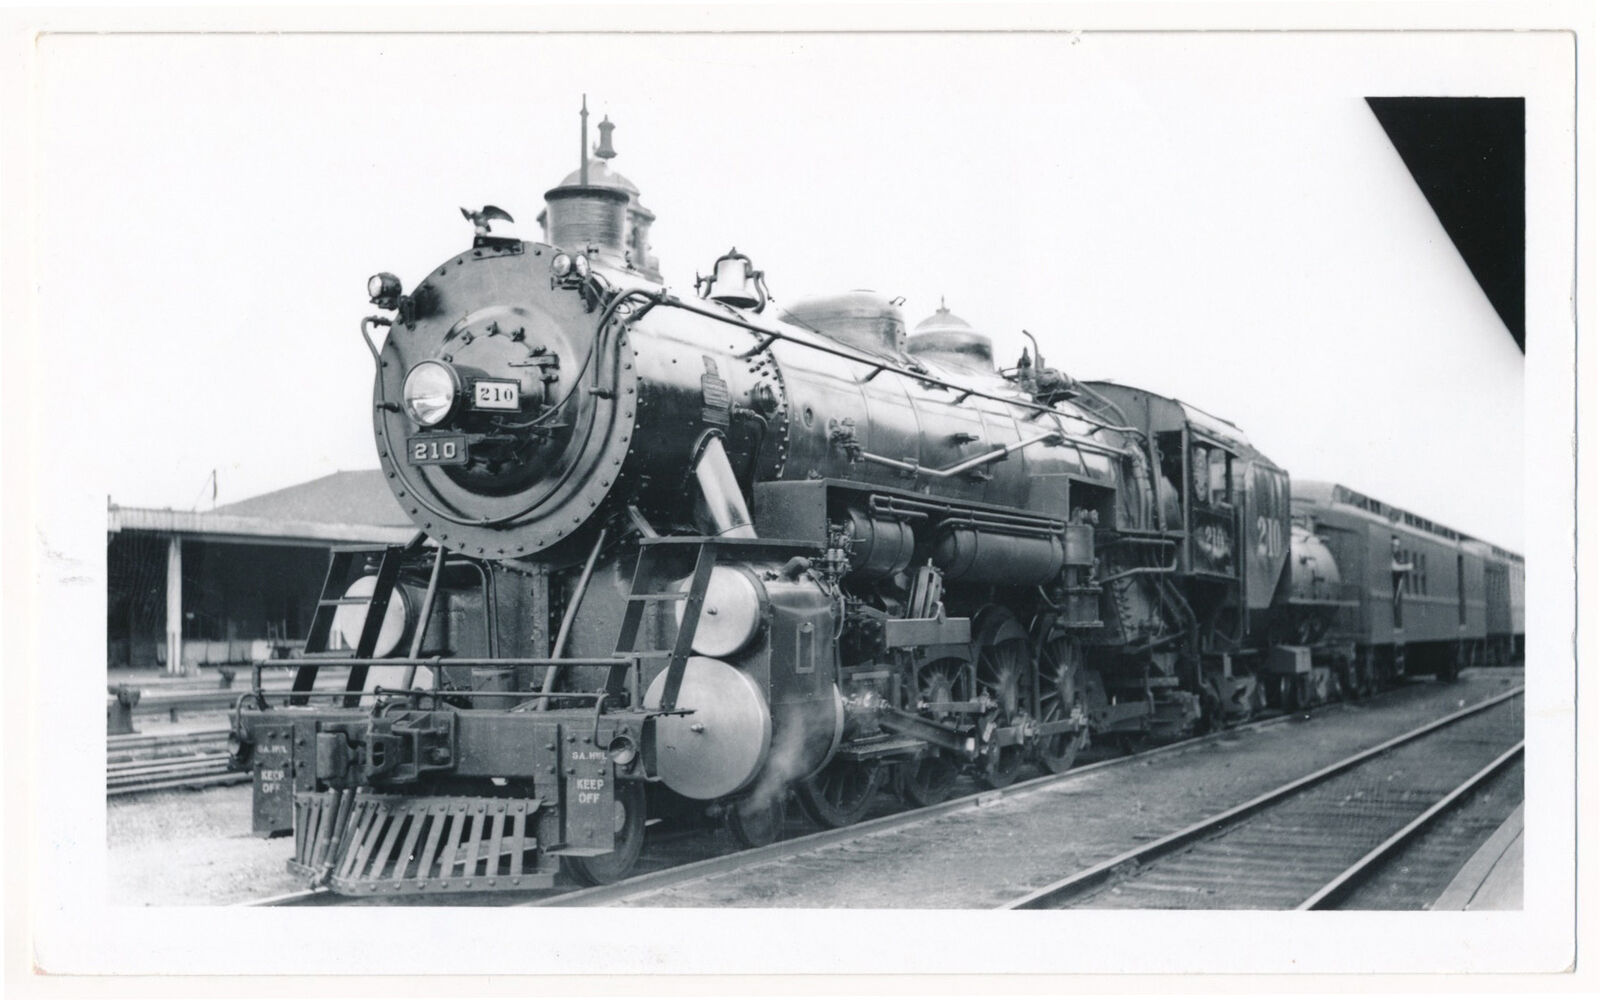 Seaboard Air Line Railroad Locomotive #210